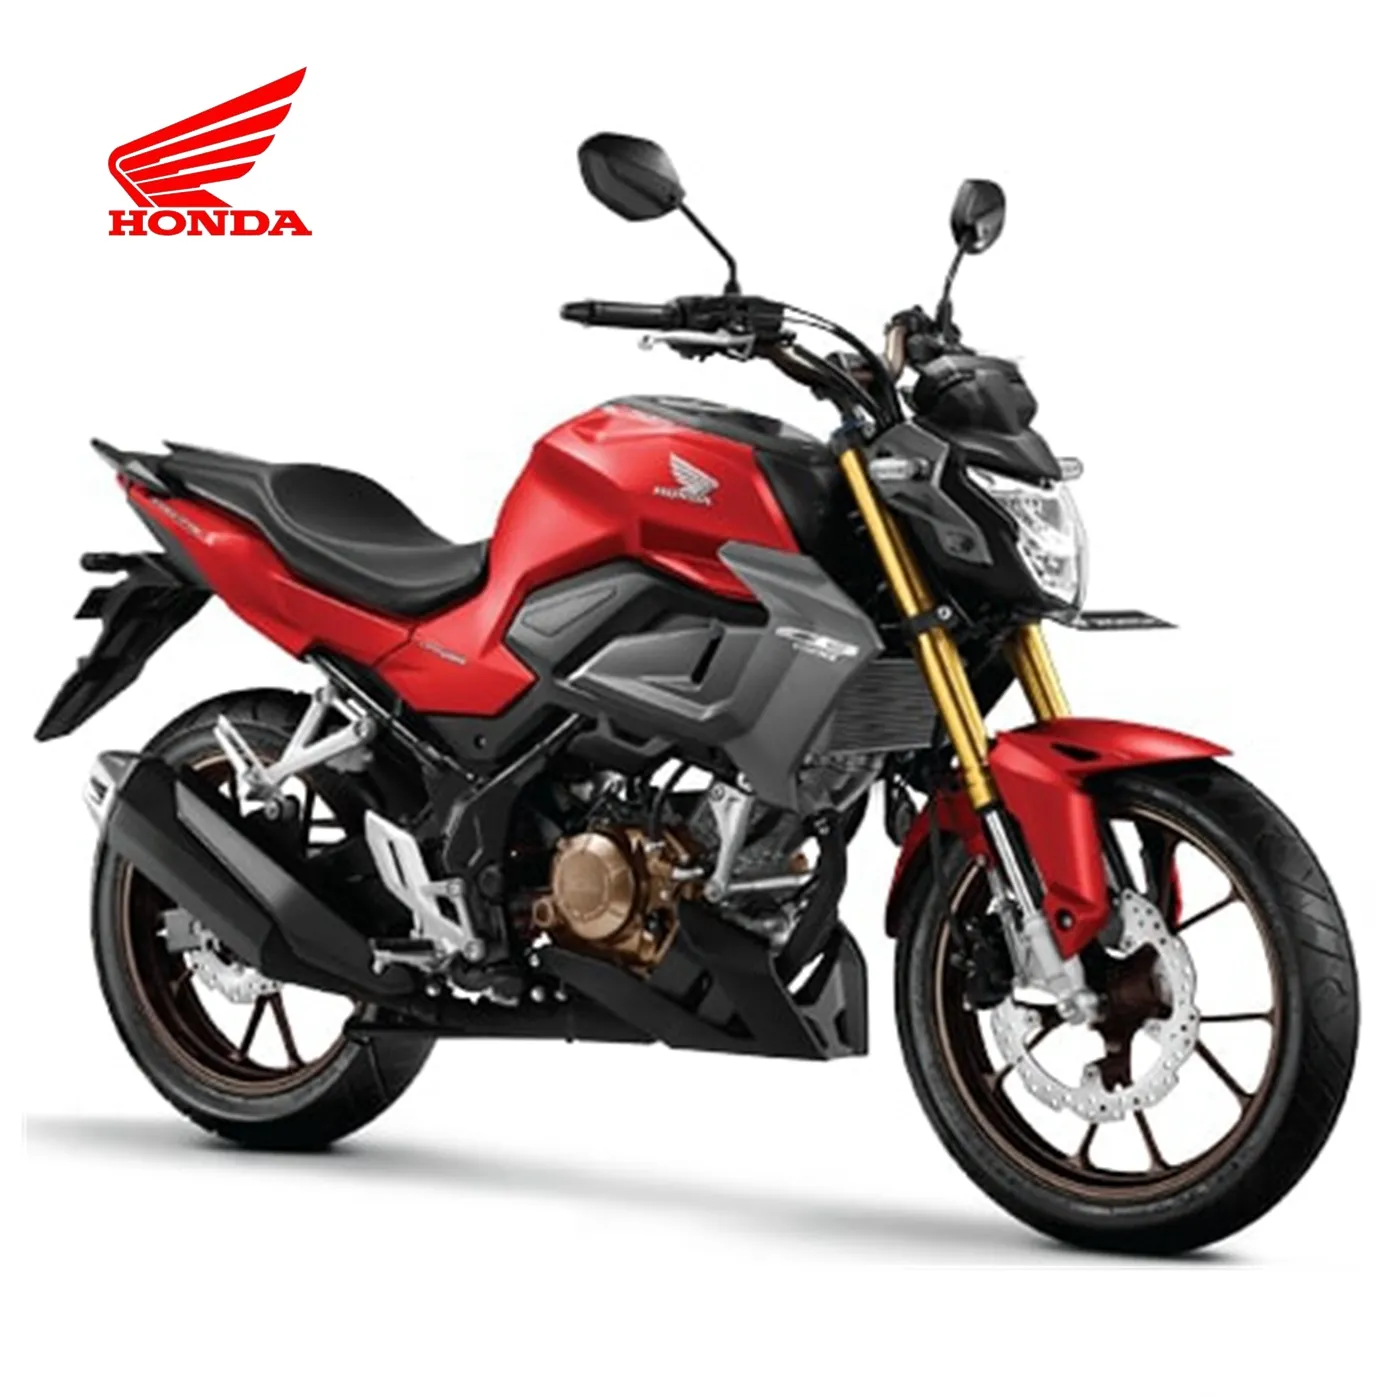 Brand New Indonesia Honda All New CB150R Street Motorcycle